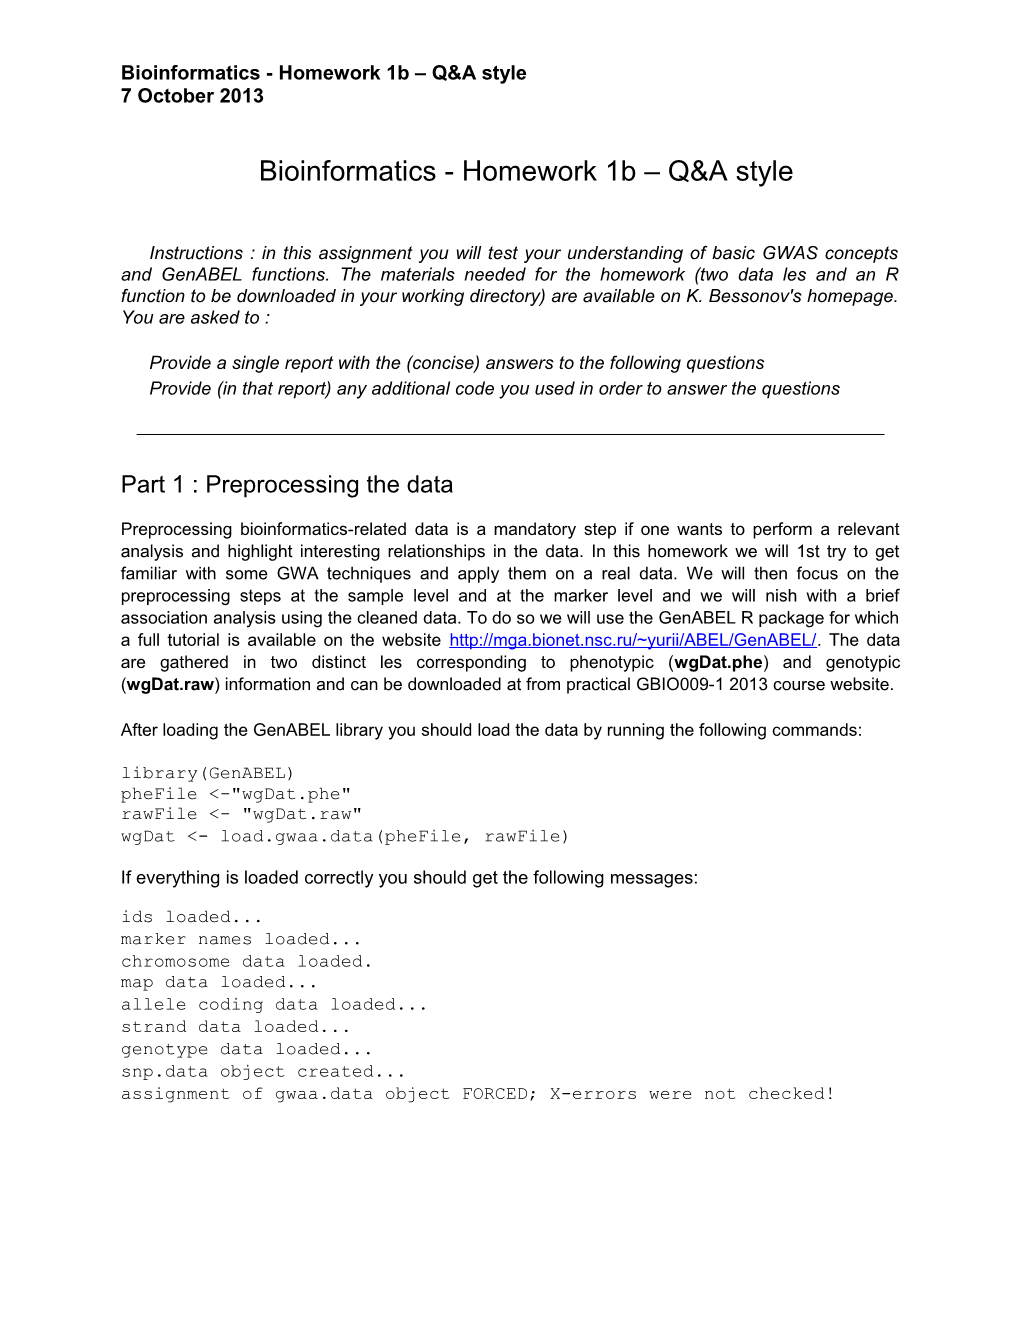 Bioinformatics - Homework 1B Q&A Style